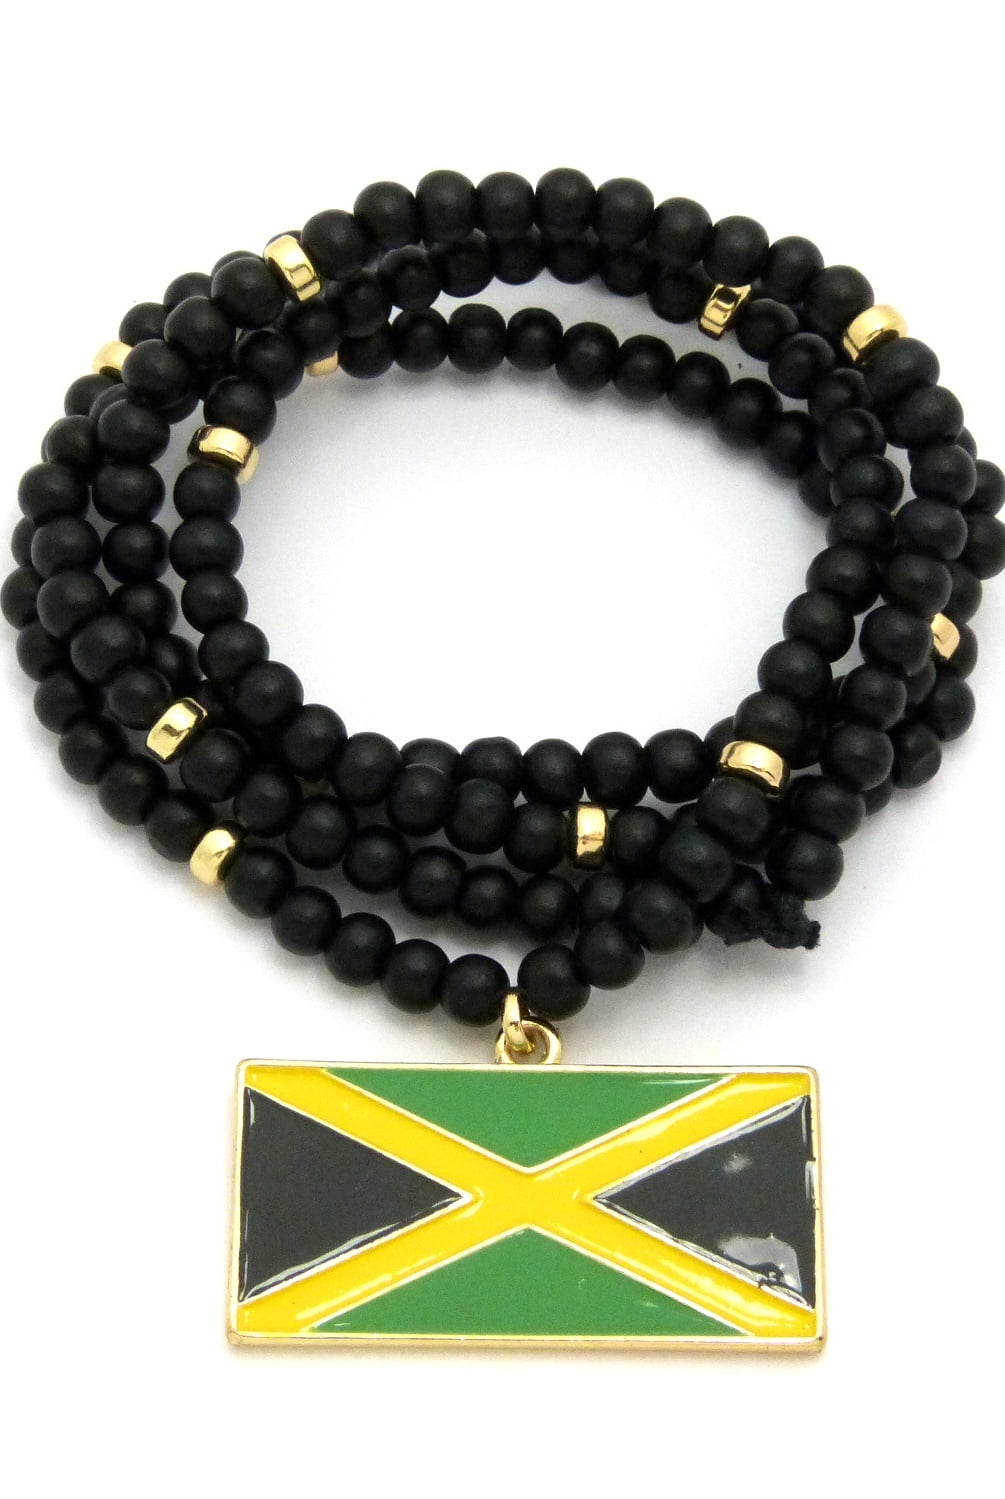 Africa Marcus Garvey Rasta Beads Choker Necklace Marley Reggae Jamaica –  nicemon